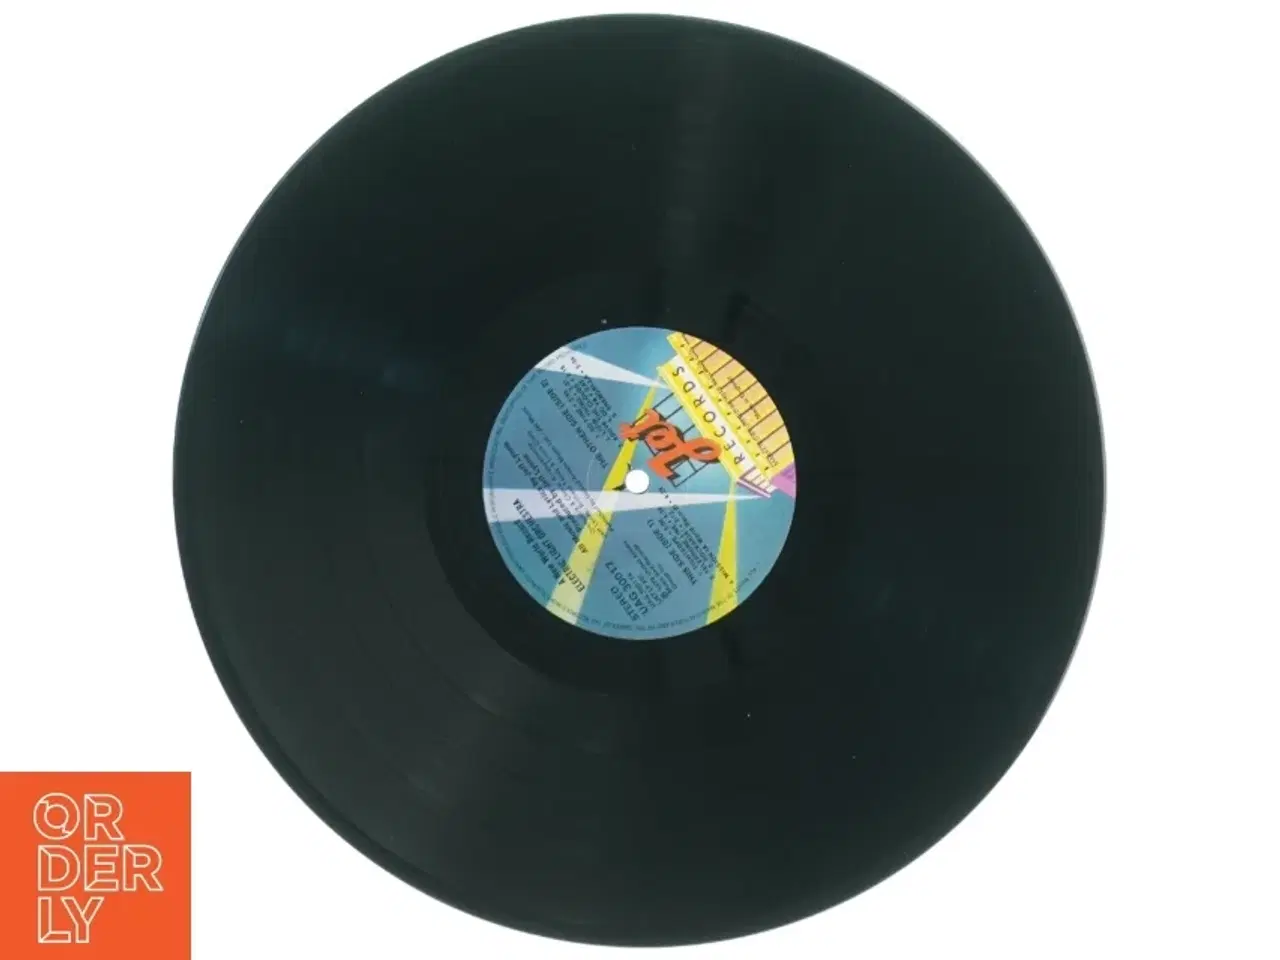 Billede 4 - ELO A new world record  - Close to the Edge LP  (str. 30 x 31 cm)